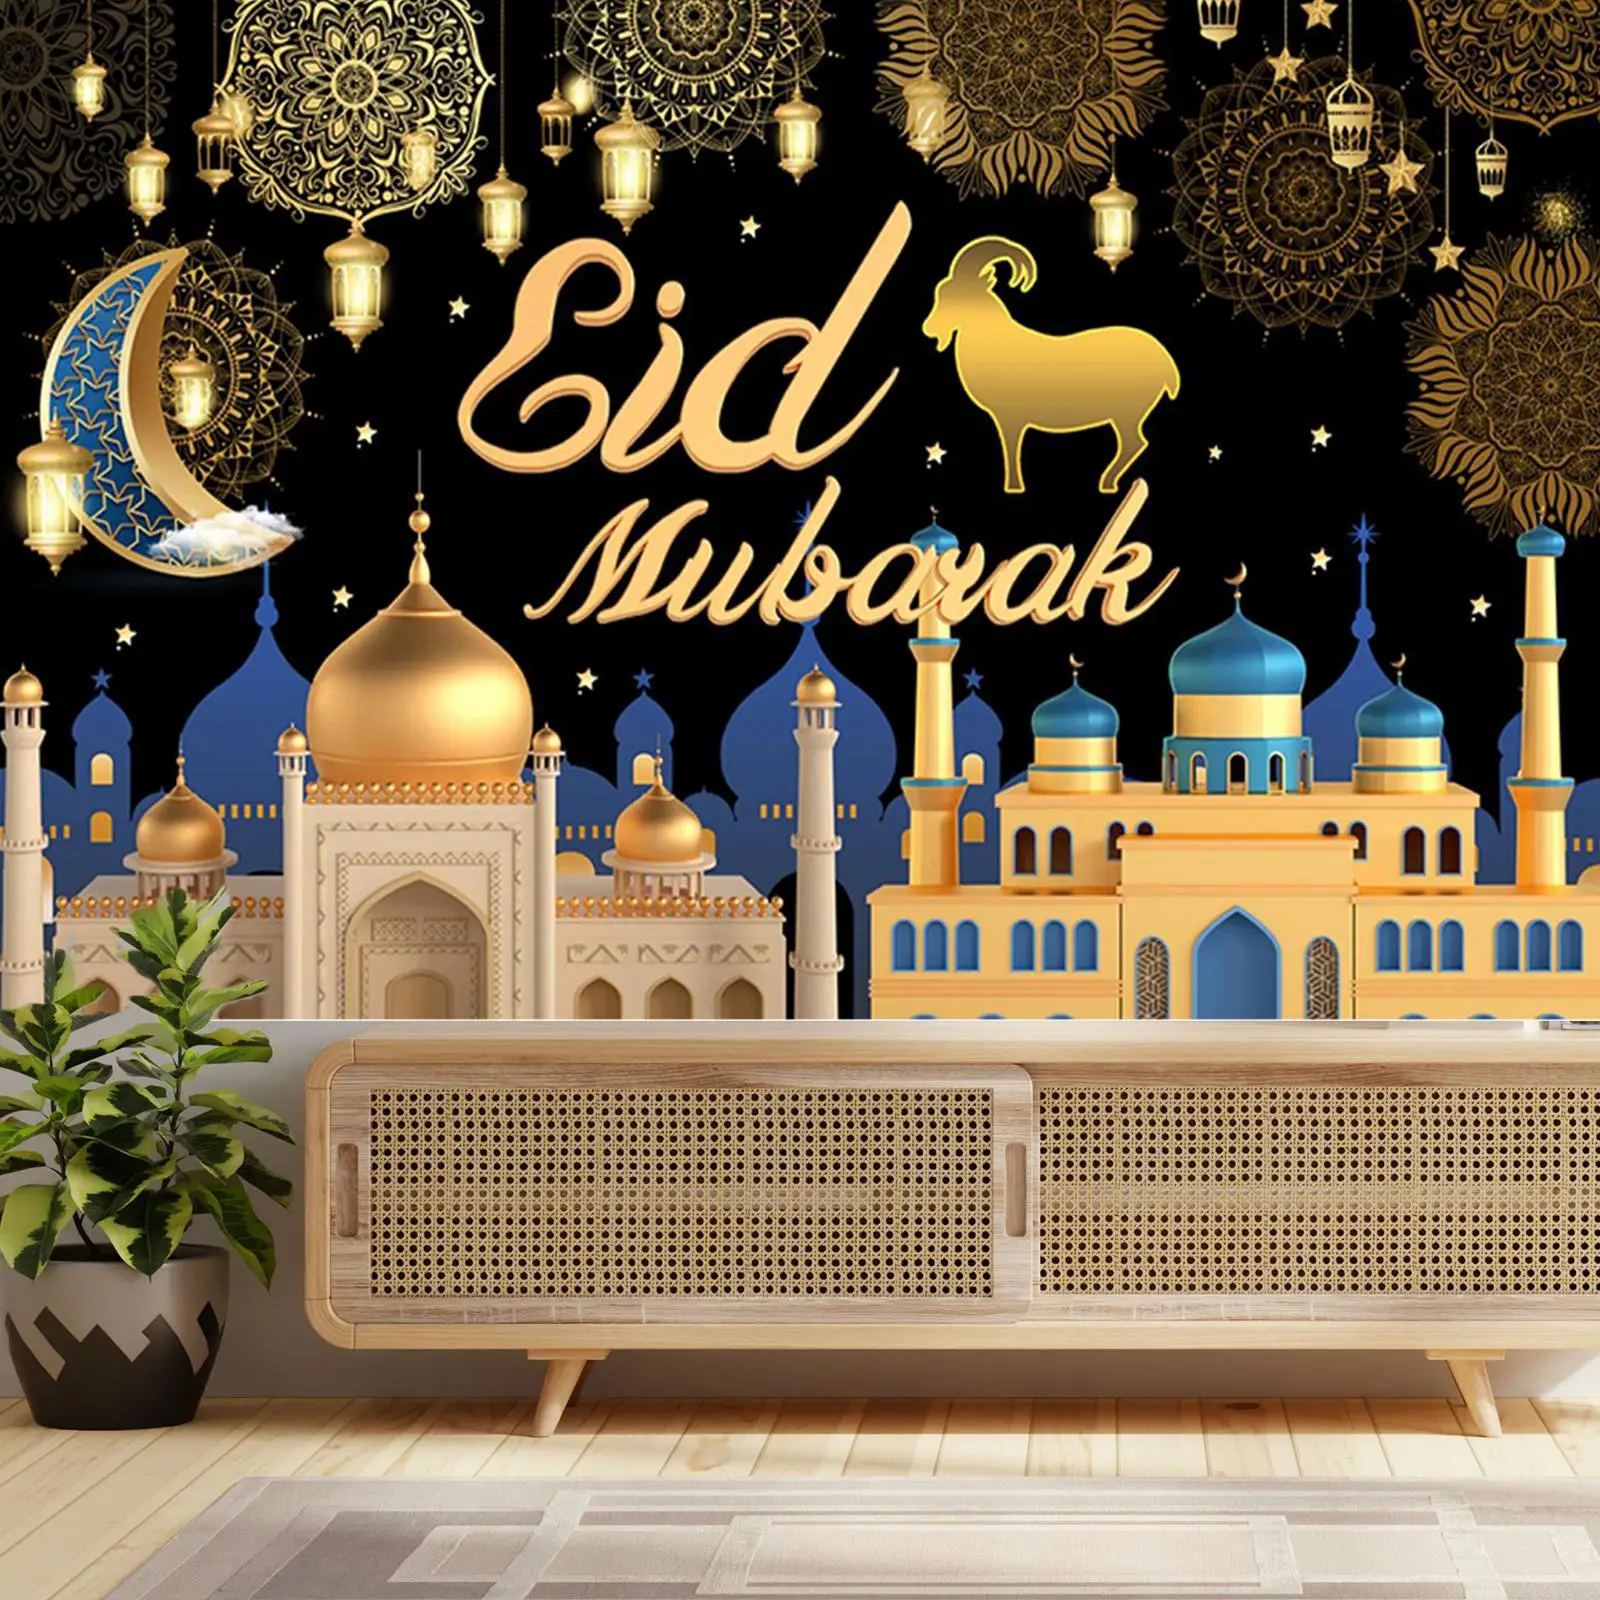 Wall Backdrop Eid Mubarak Eid Mubarak Decor Eid Mubarak Banner Large Ramadan Mubarak Sign for Indoor Outdoor Muslim Ornament